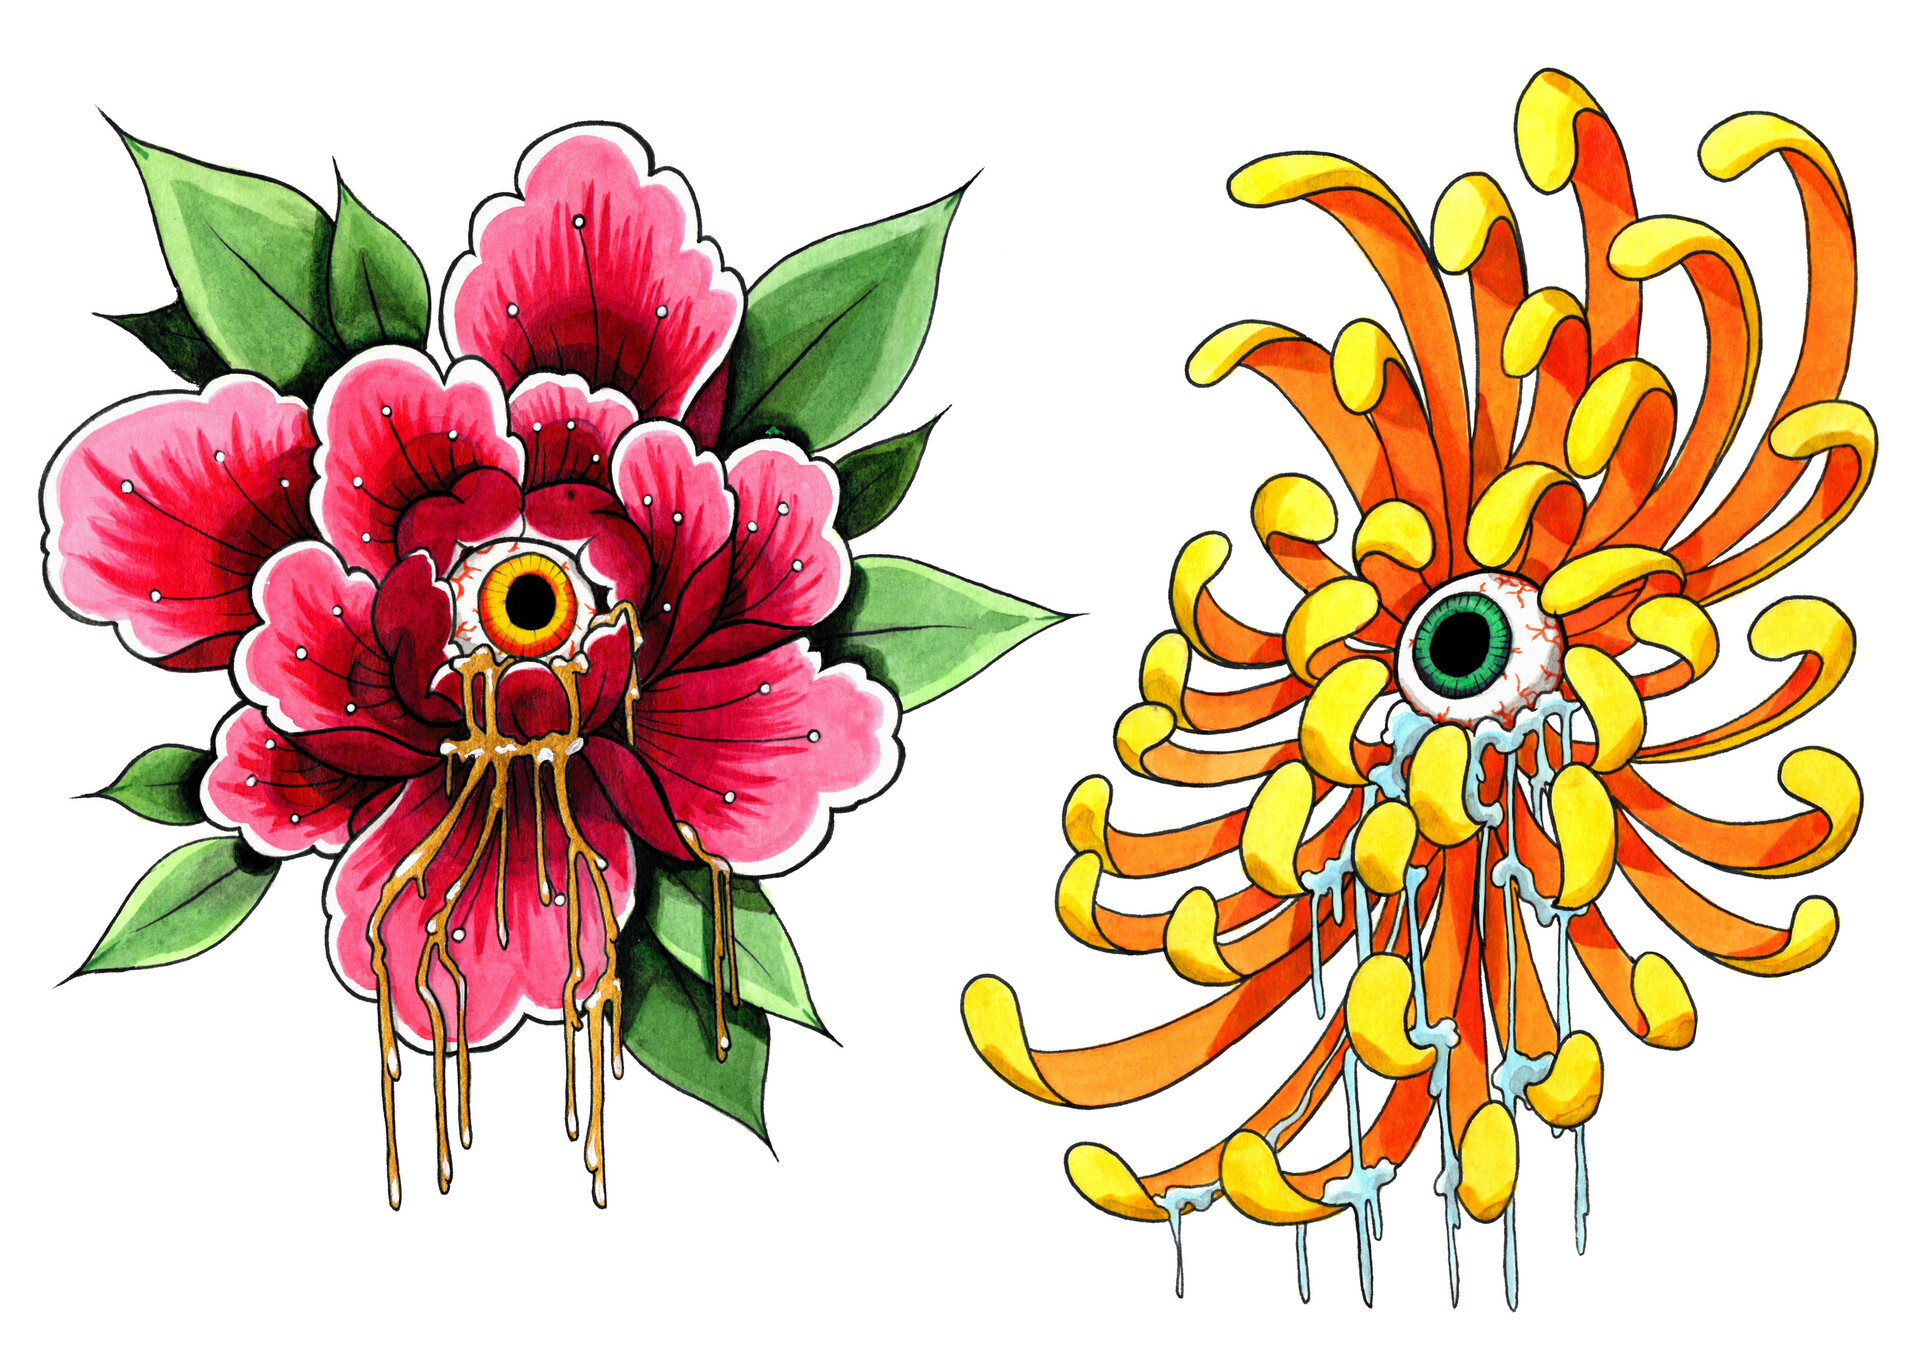 Aster September birth flower tattoo design Hardcover Journal for Sale by  InkImaginarium  Redbubble